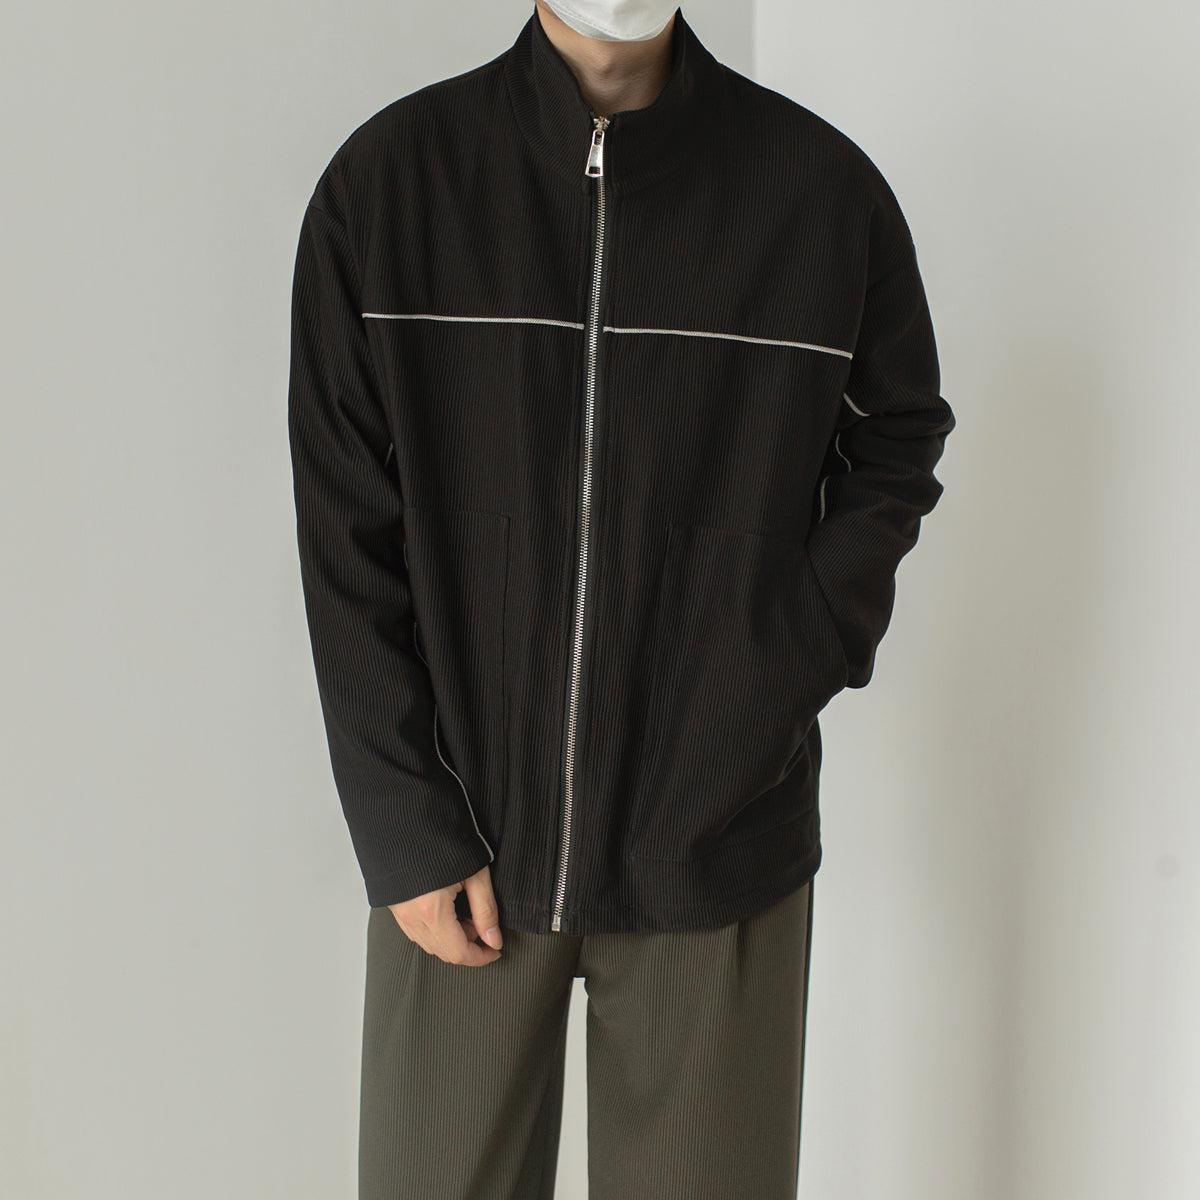 Zhou Minimal Line Zipped Jacket-korean-fashion-Jacket-Zhou's Closet-OH Garments